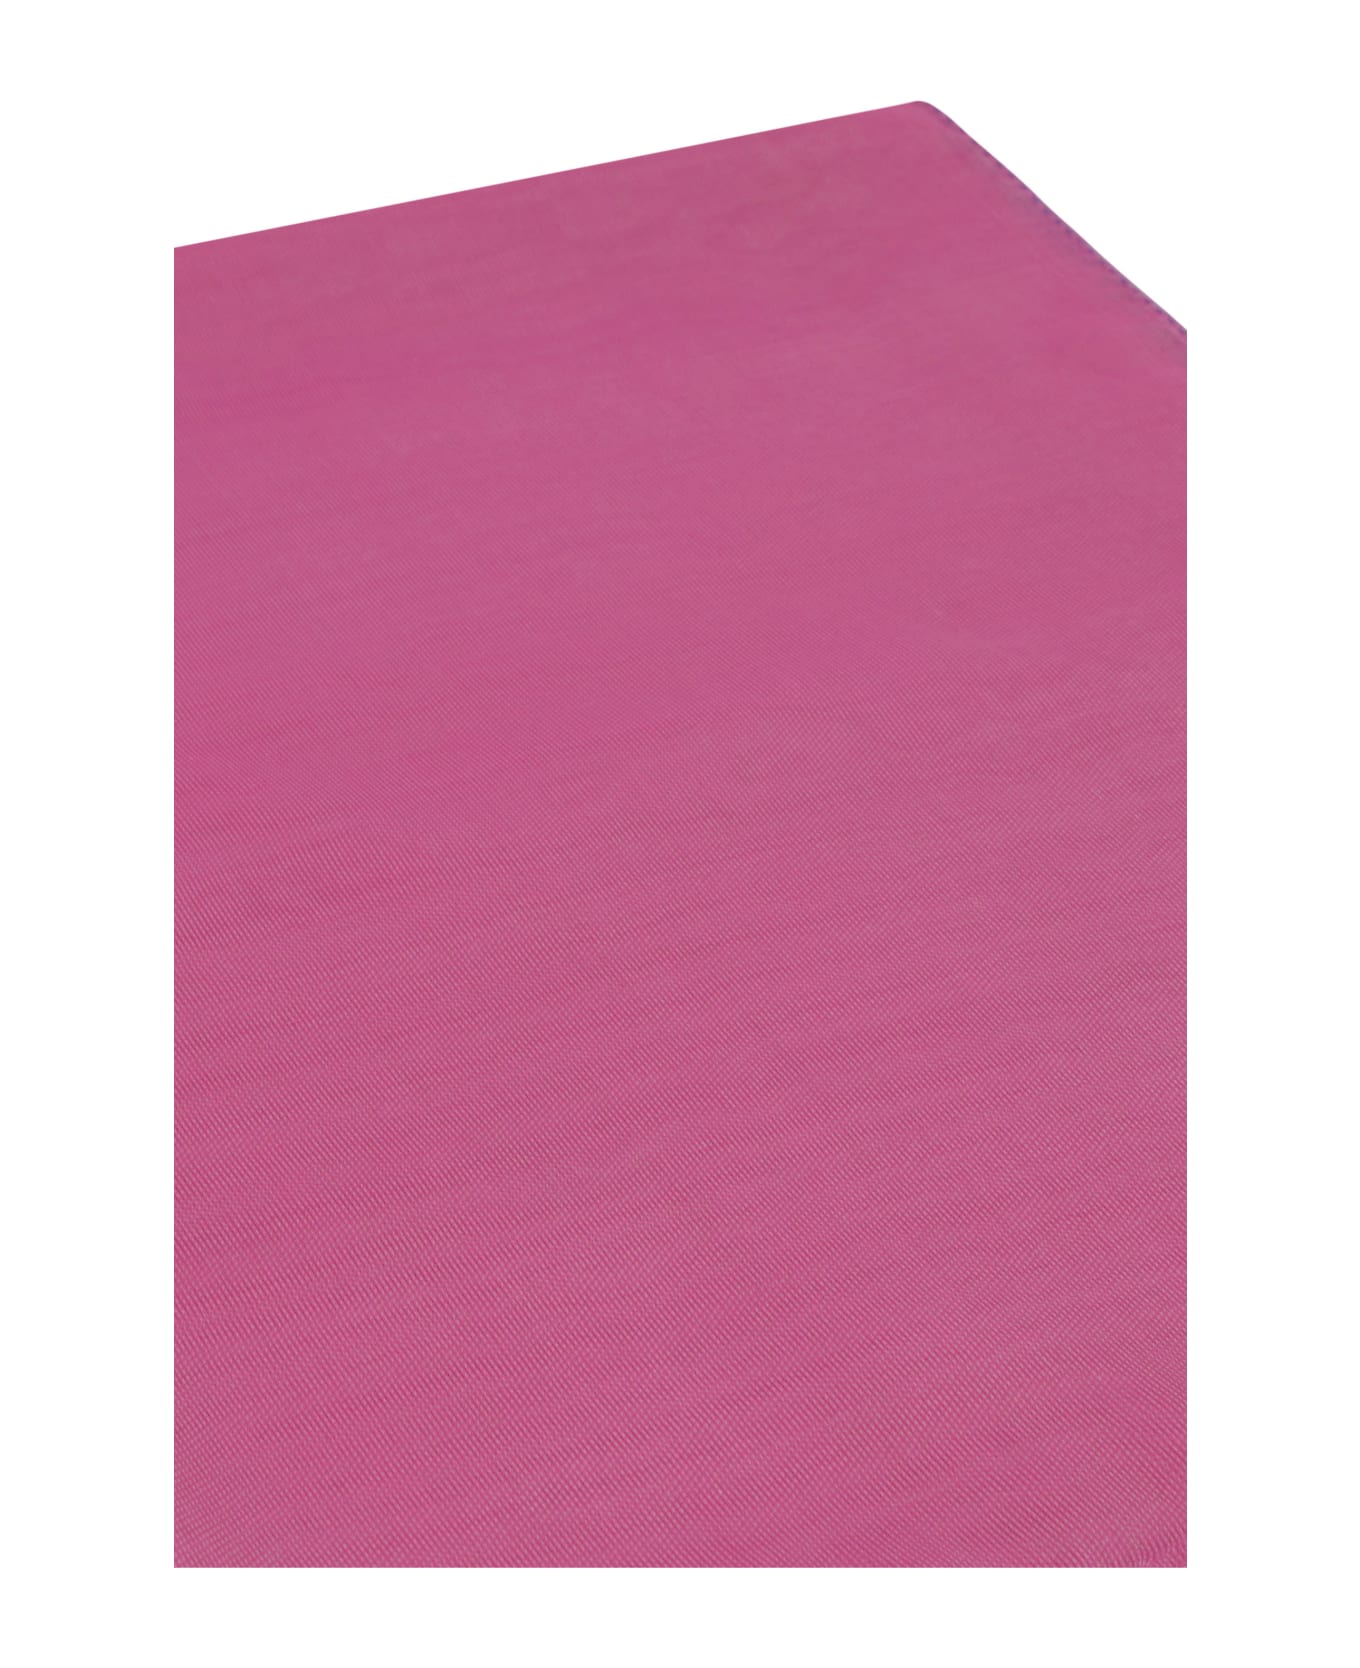 Giorgio Armani Silk Scarf - Pink